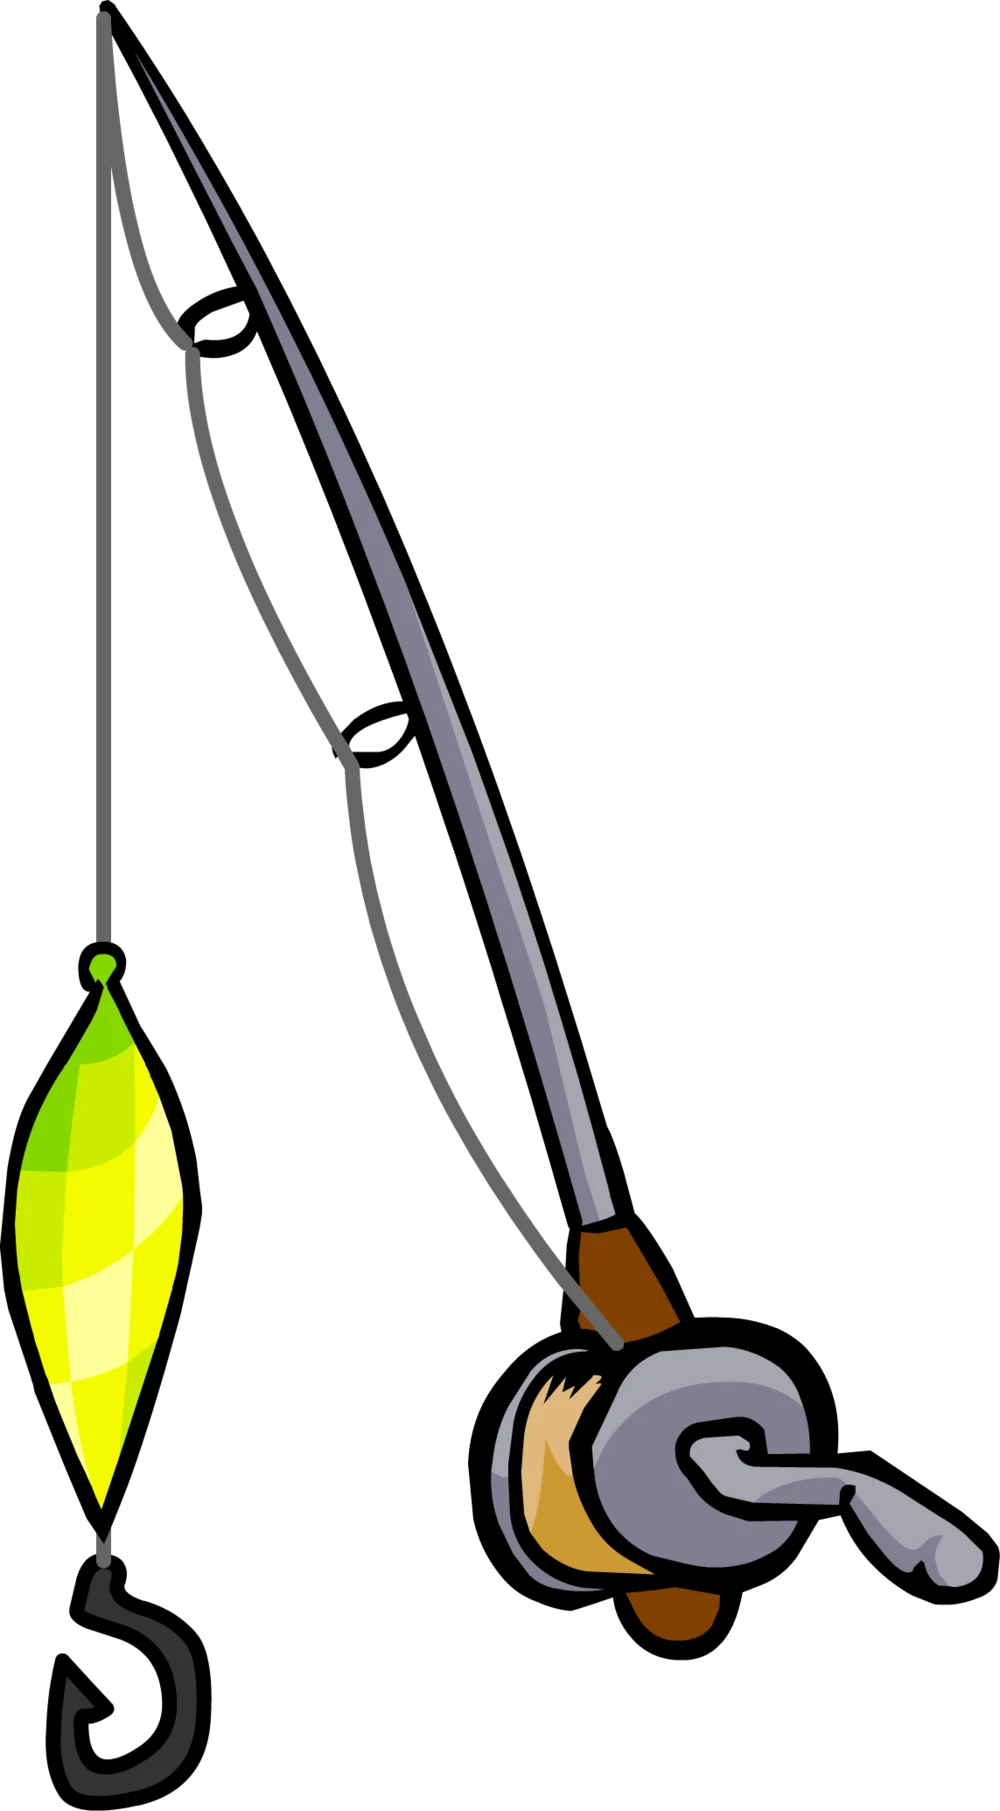 fishing rod cartoon